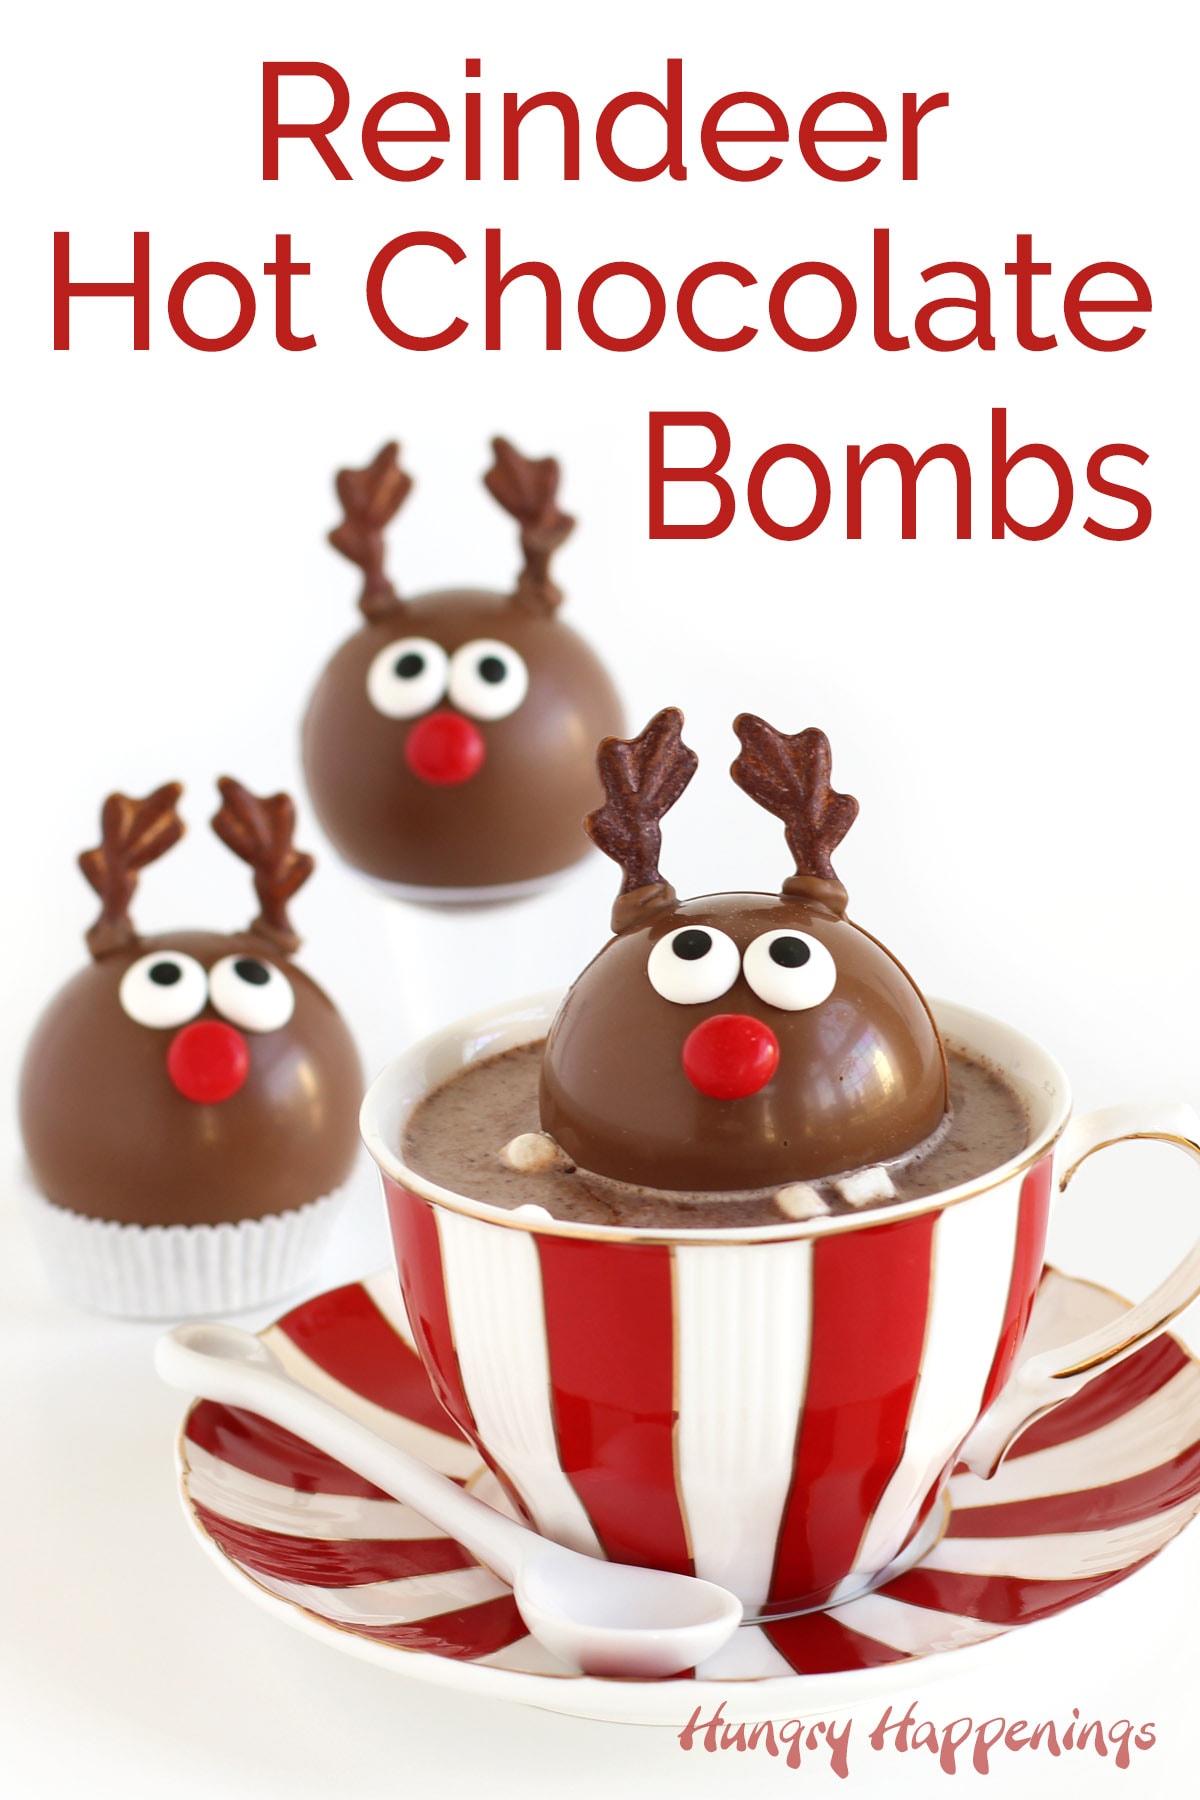 Reindeer Hot Chocolate Bombs in a candy cane striped mug.